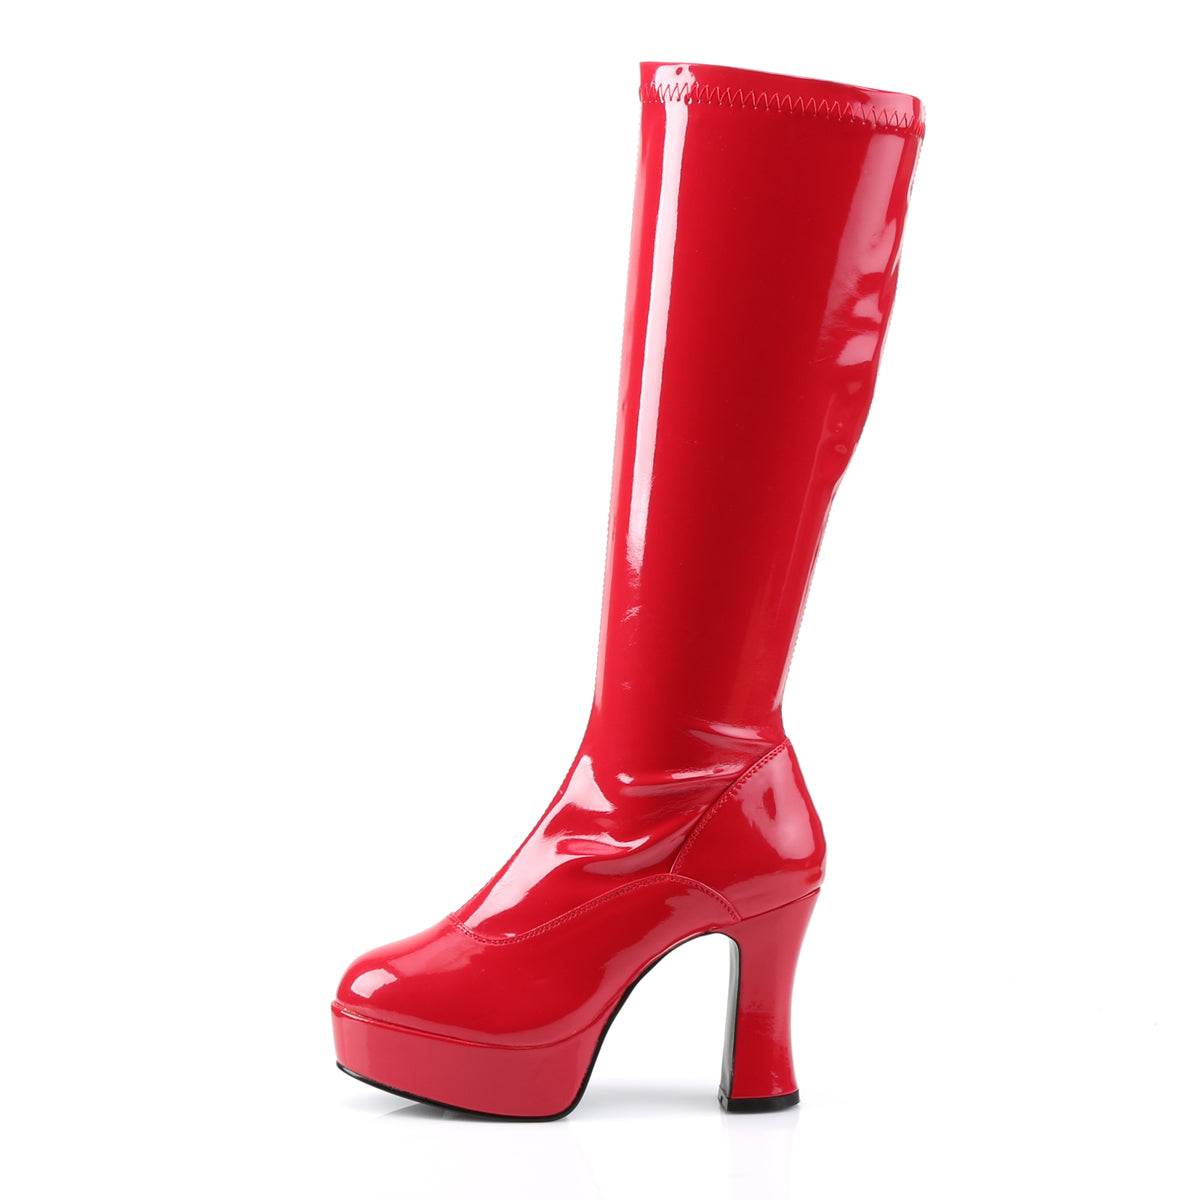 EXOTICA-2000 Funtasma 4 Inch Heel Red Women's Boots Funtasma Costume Shoes 